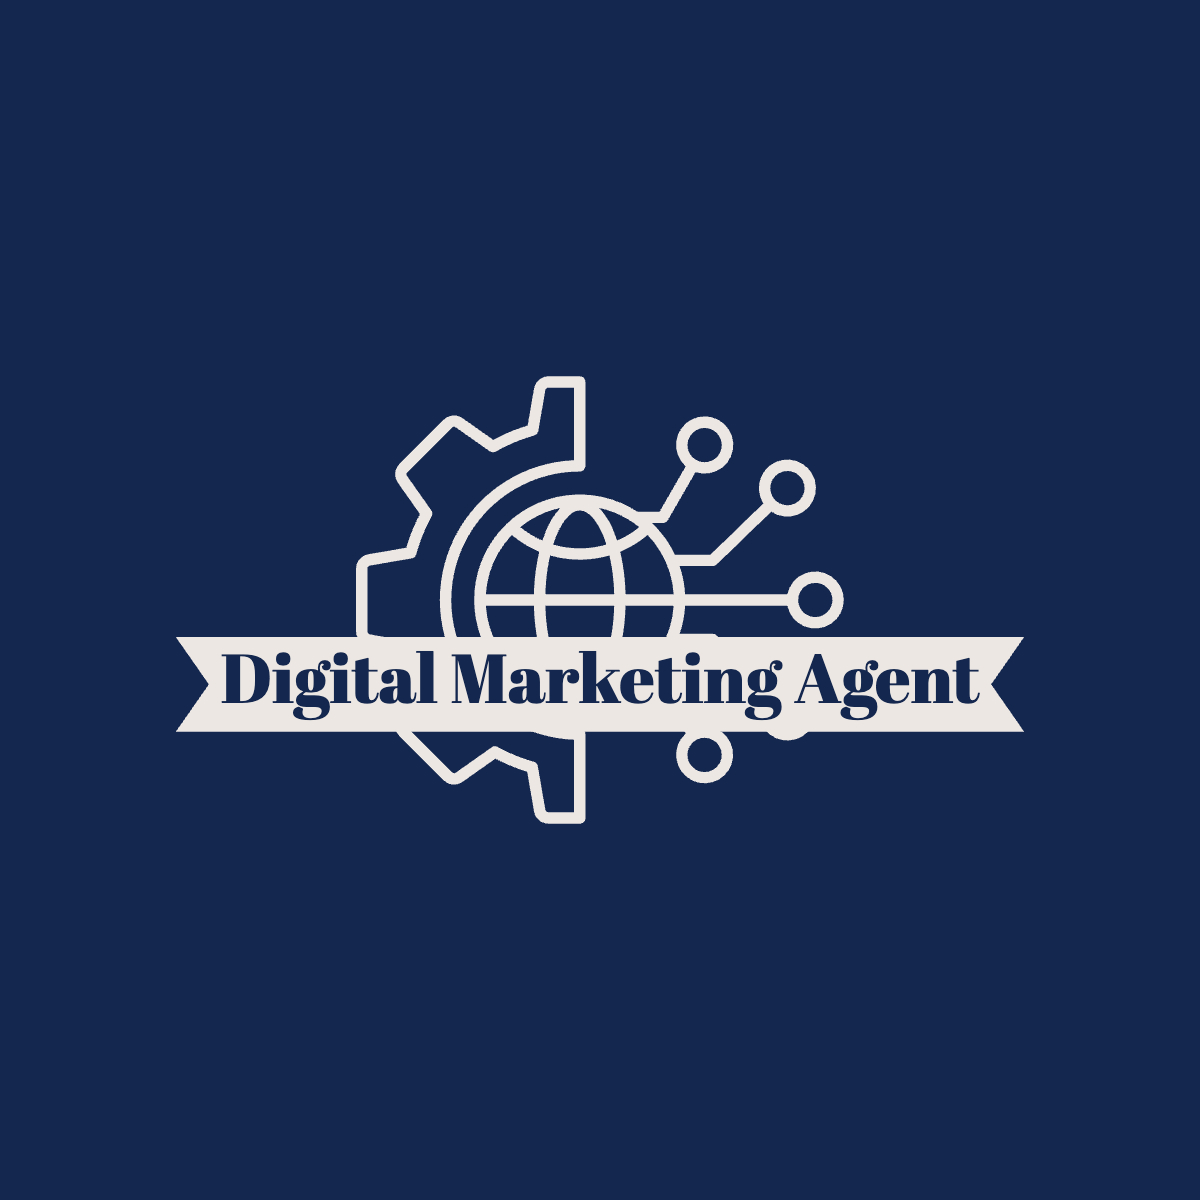 Logo of Digital Marketing Agent